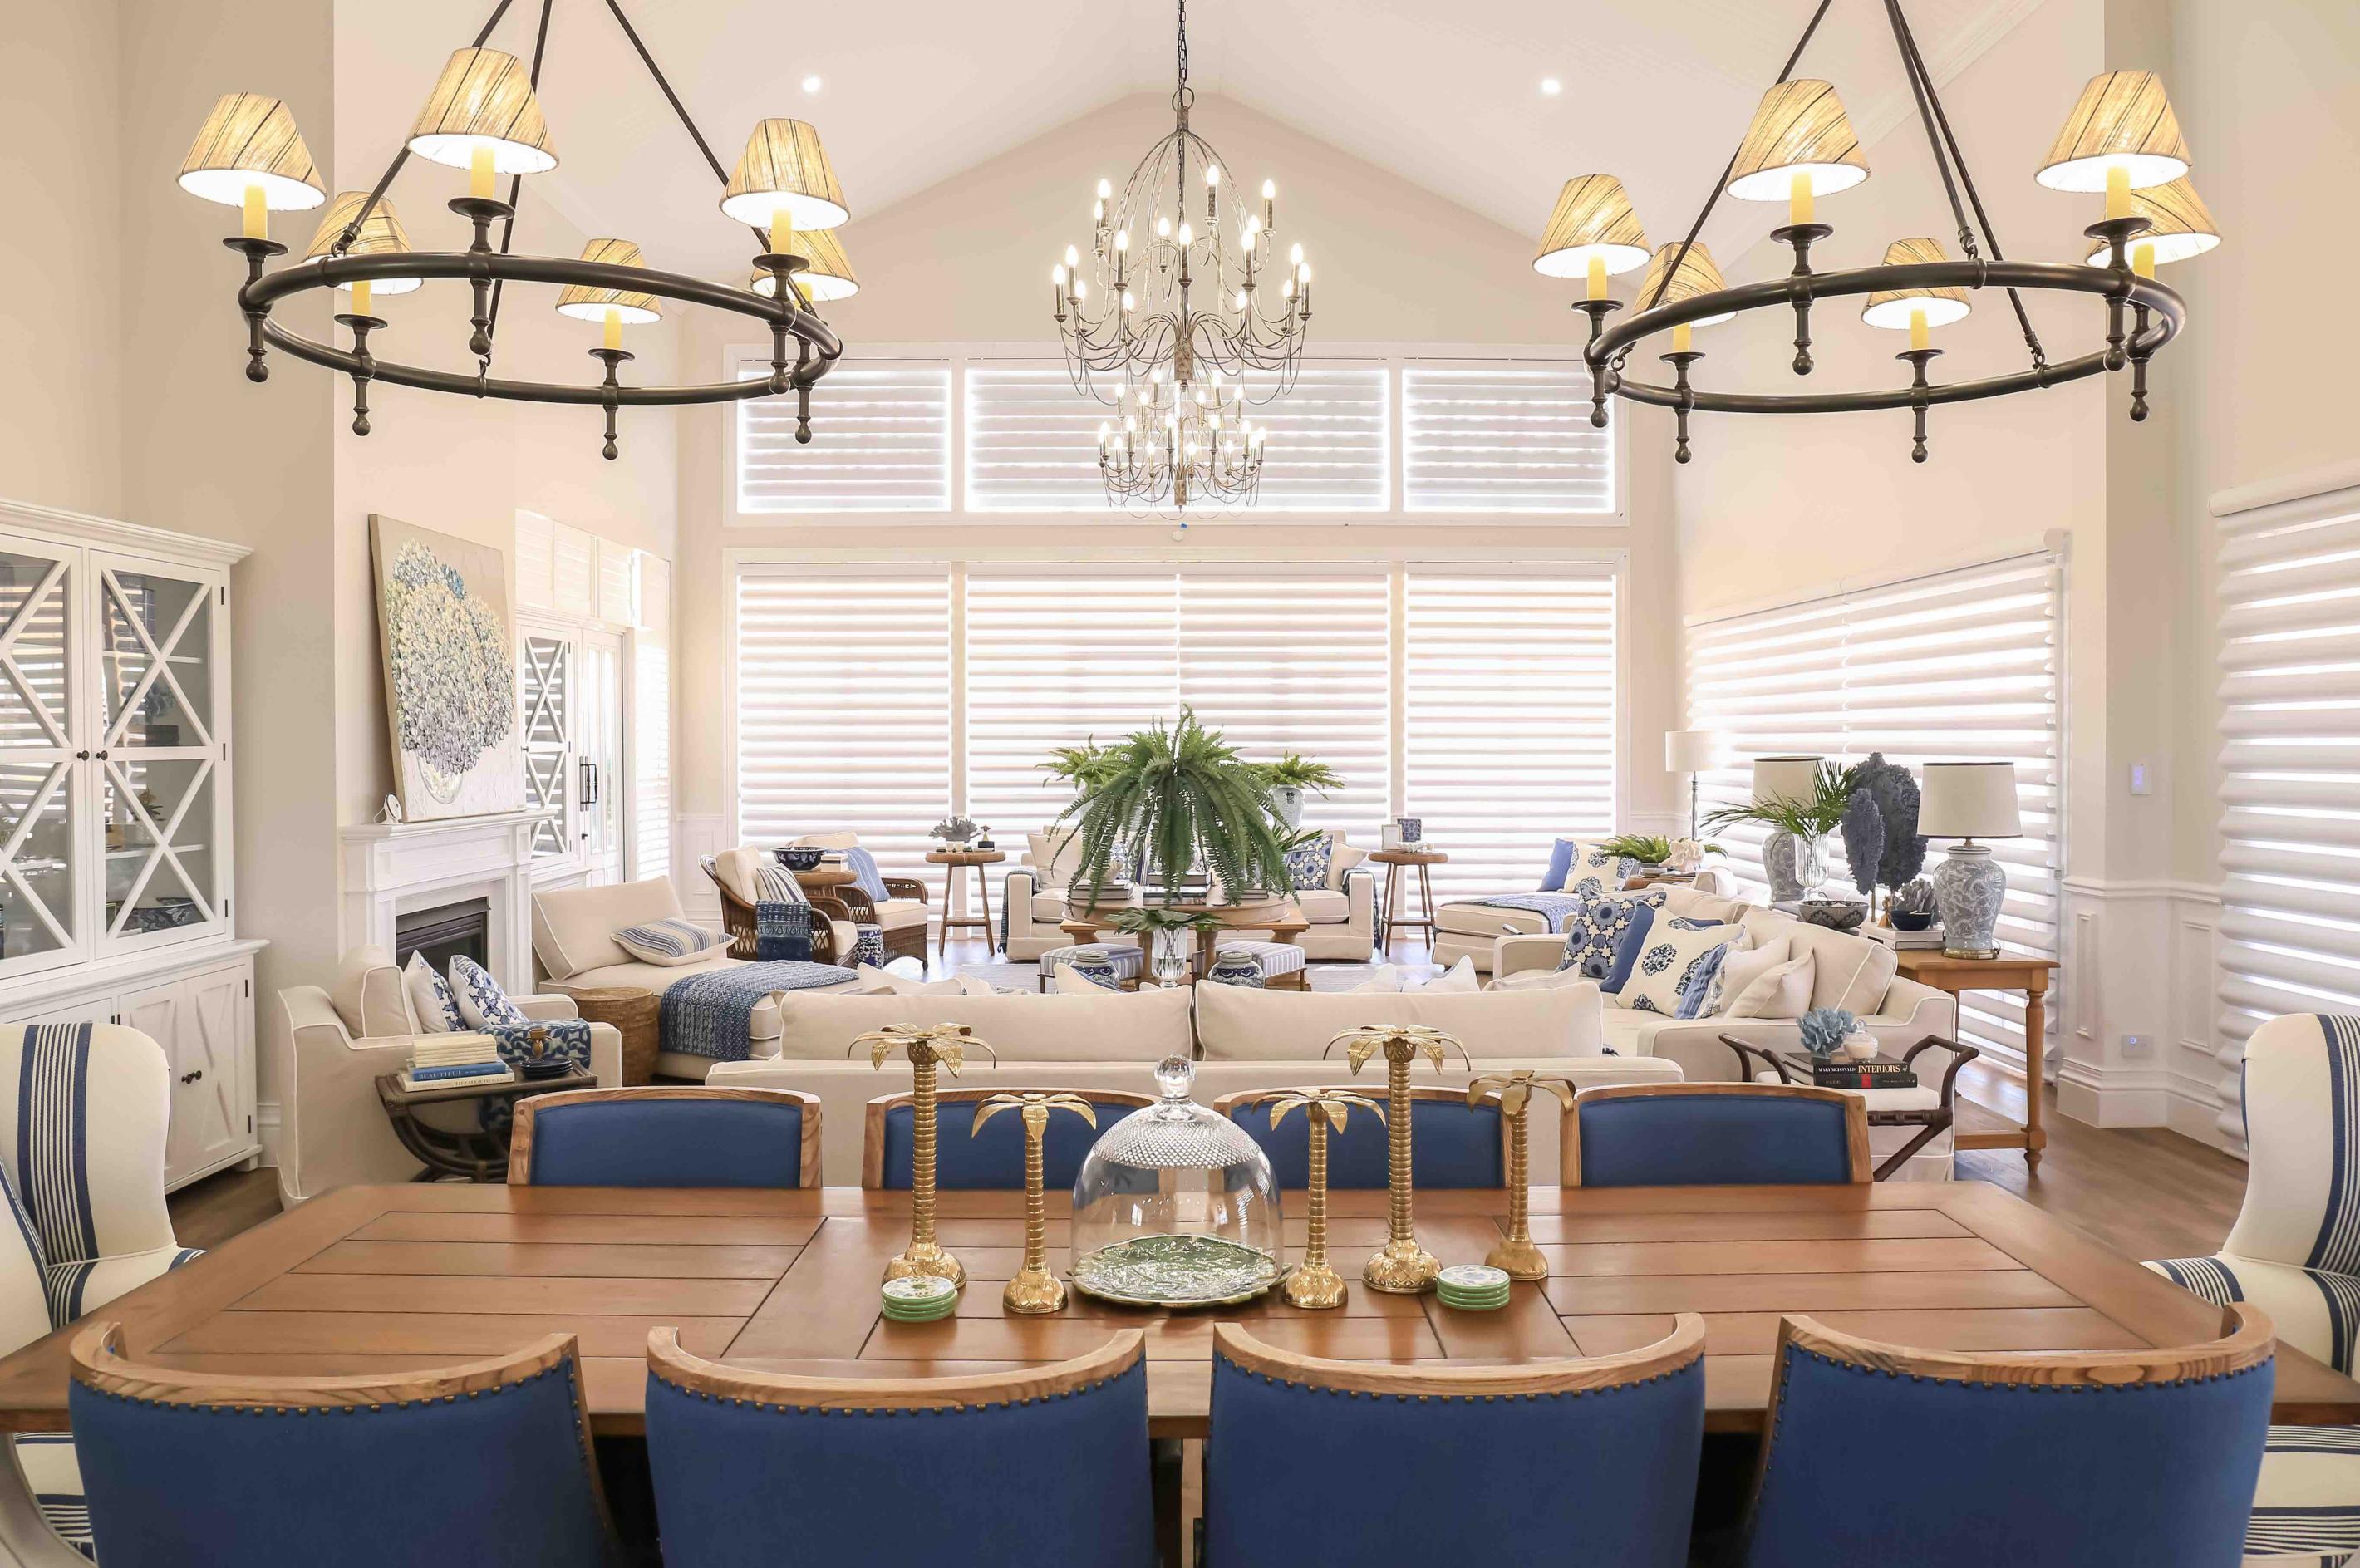 'Hamptons Farmhouse' by Indah Island Interior Designers. COLORBOND® steel